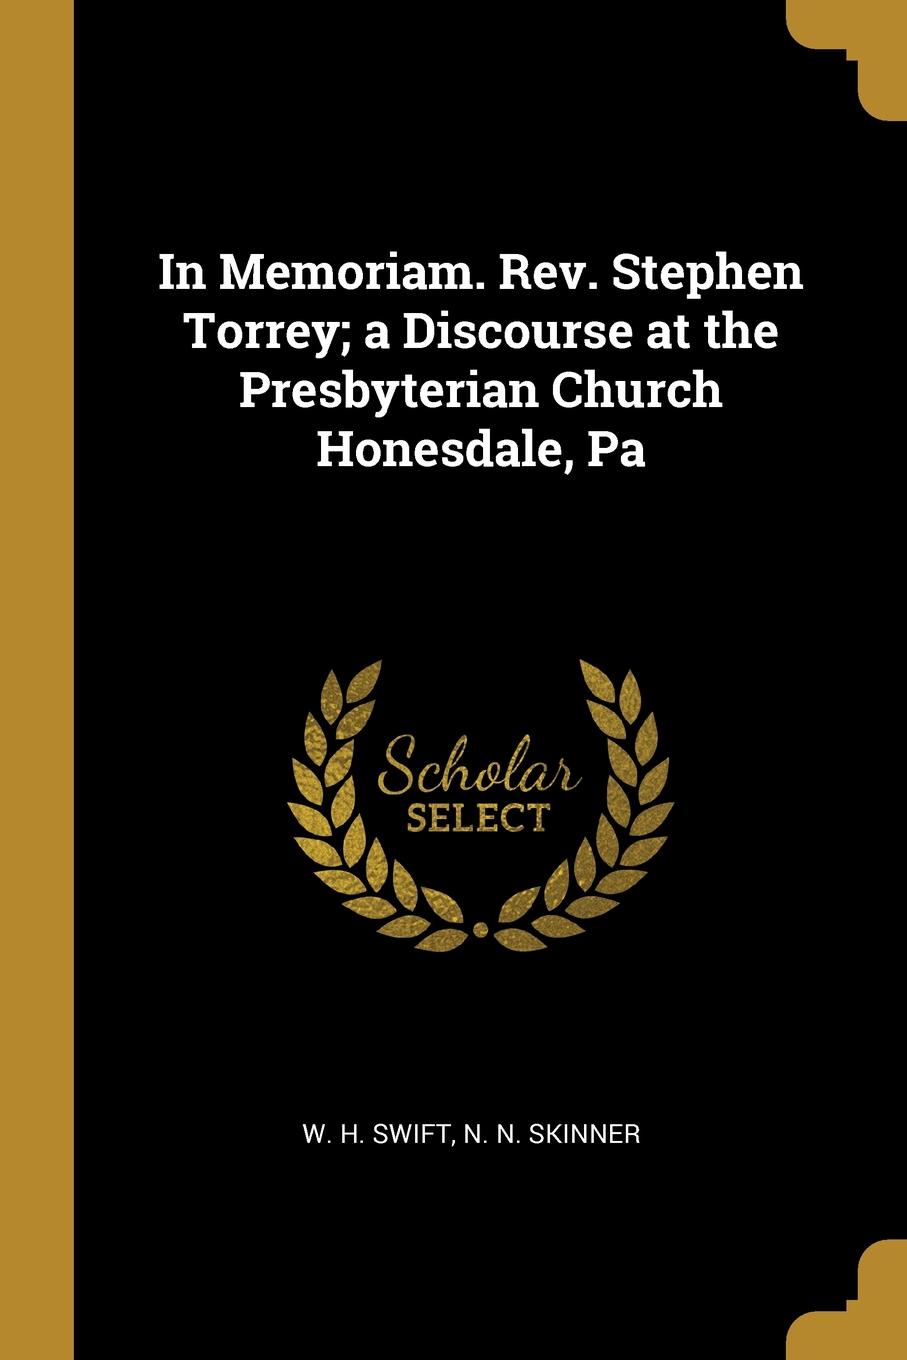 In Memoriam. Rev. Stephen Torrey; a Discourse at the Presbyterian Church Honesdale, Pa